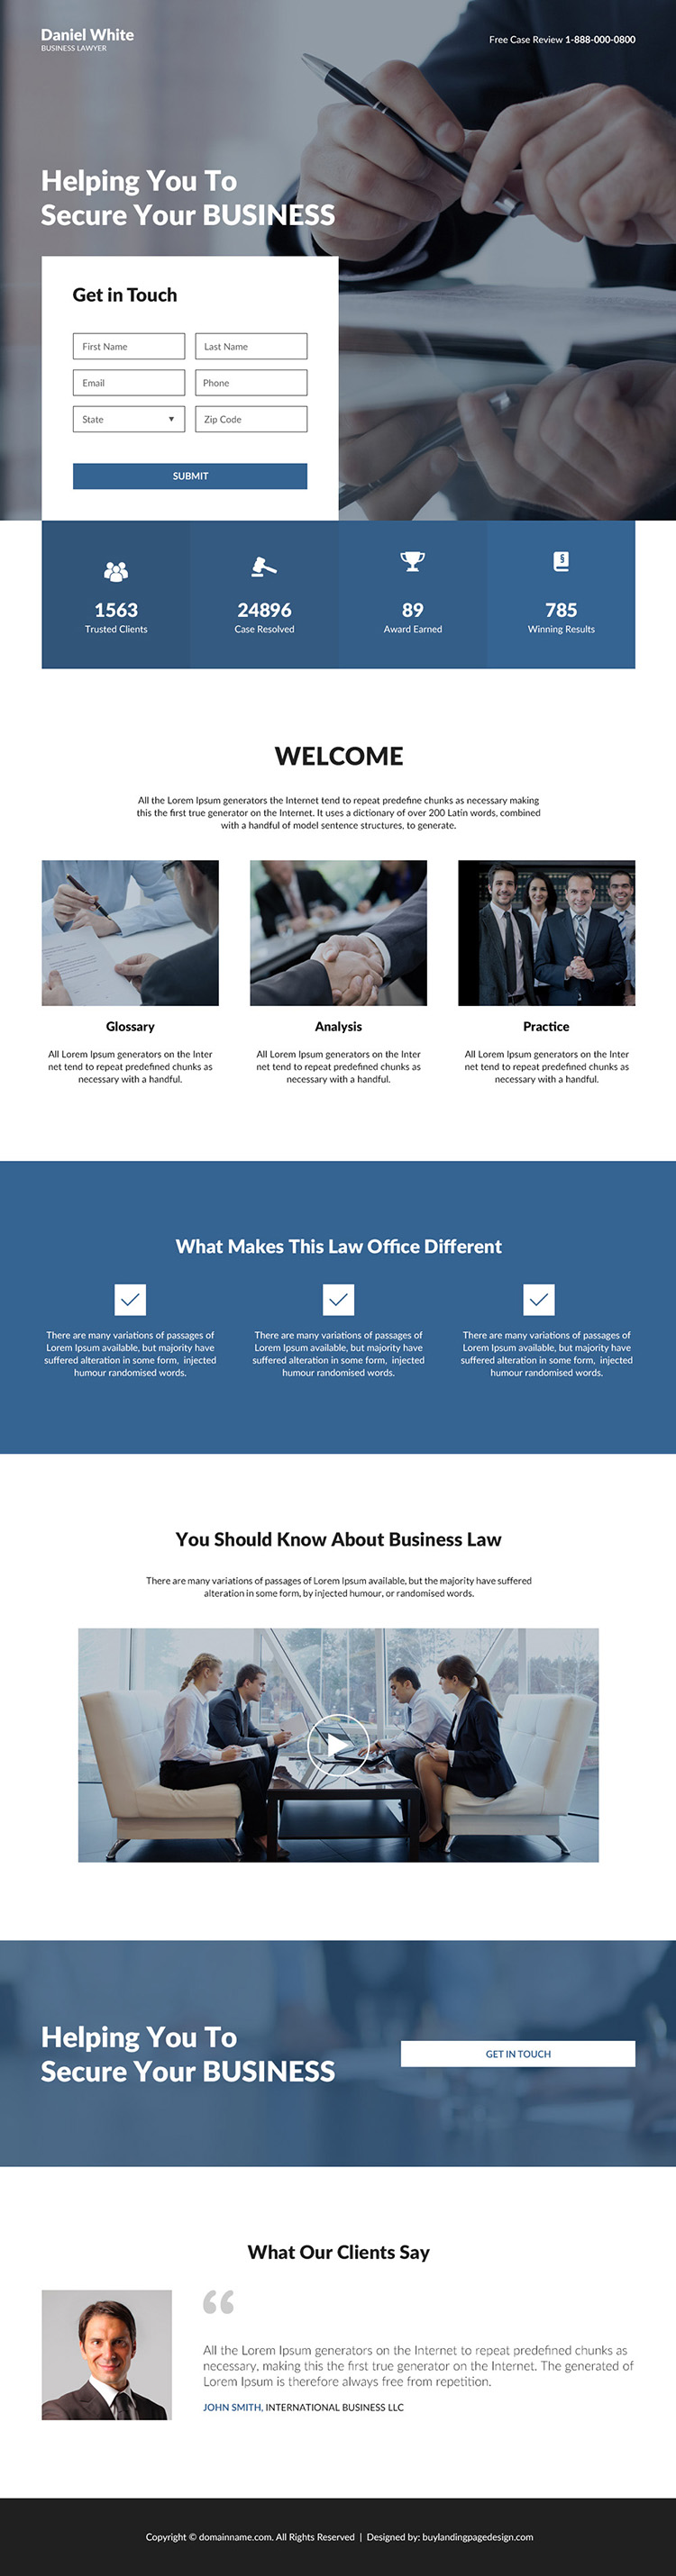 business lawyer lead capture responsive landing page design